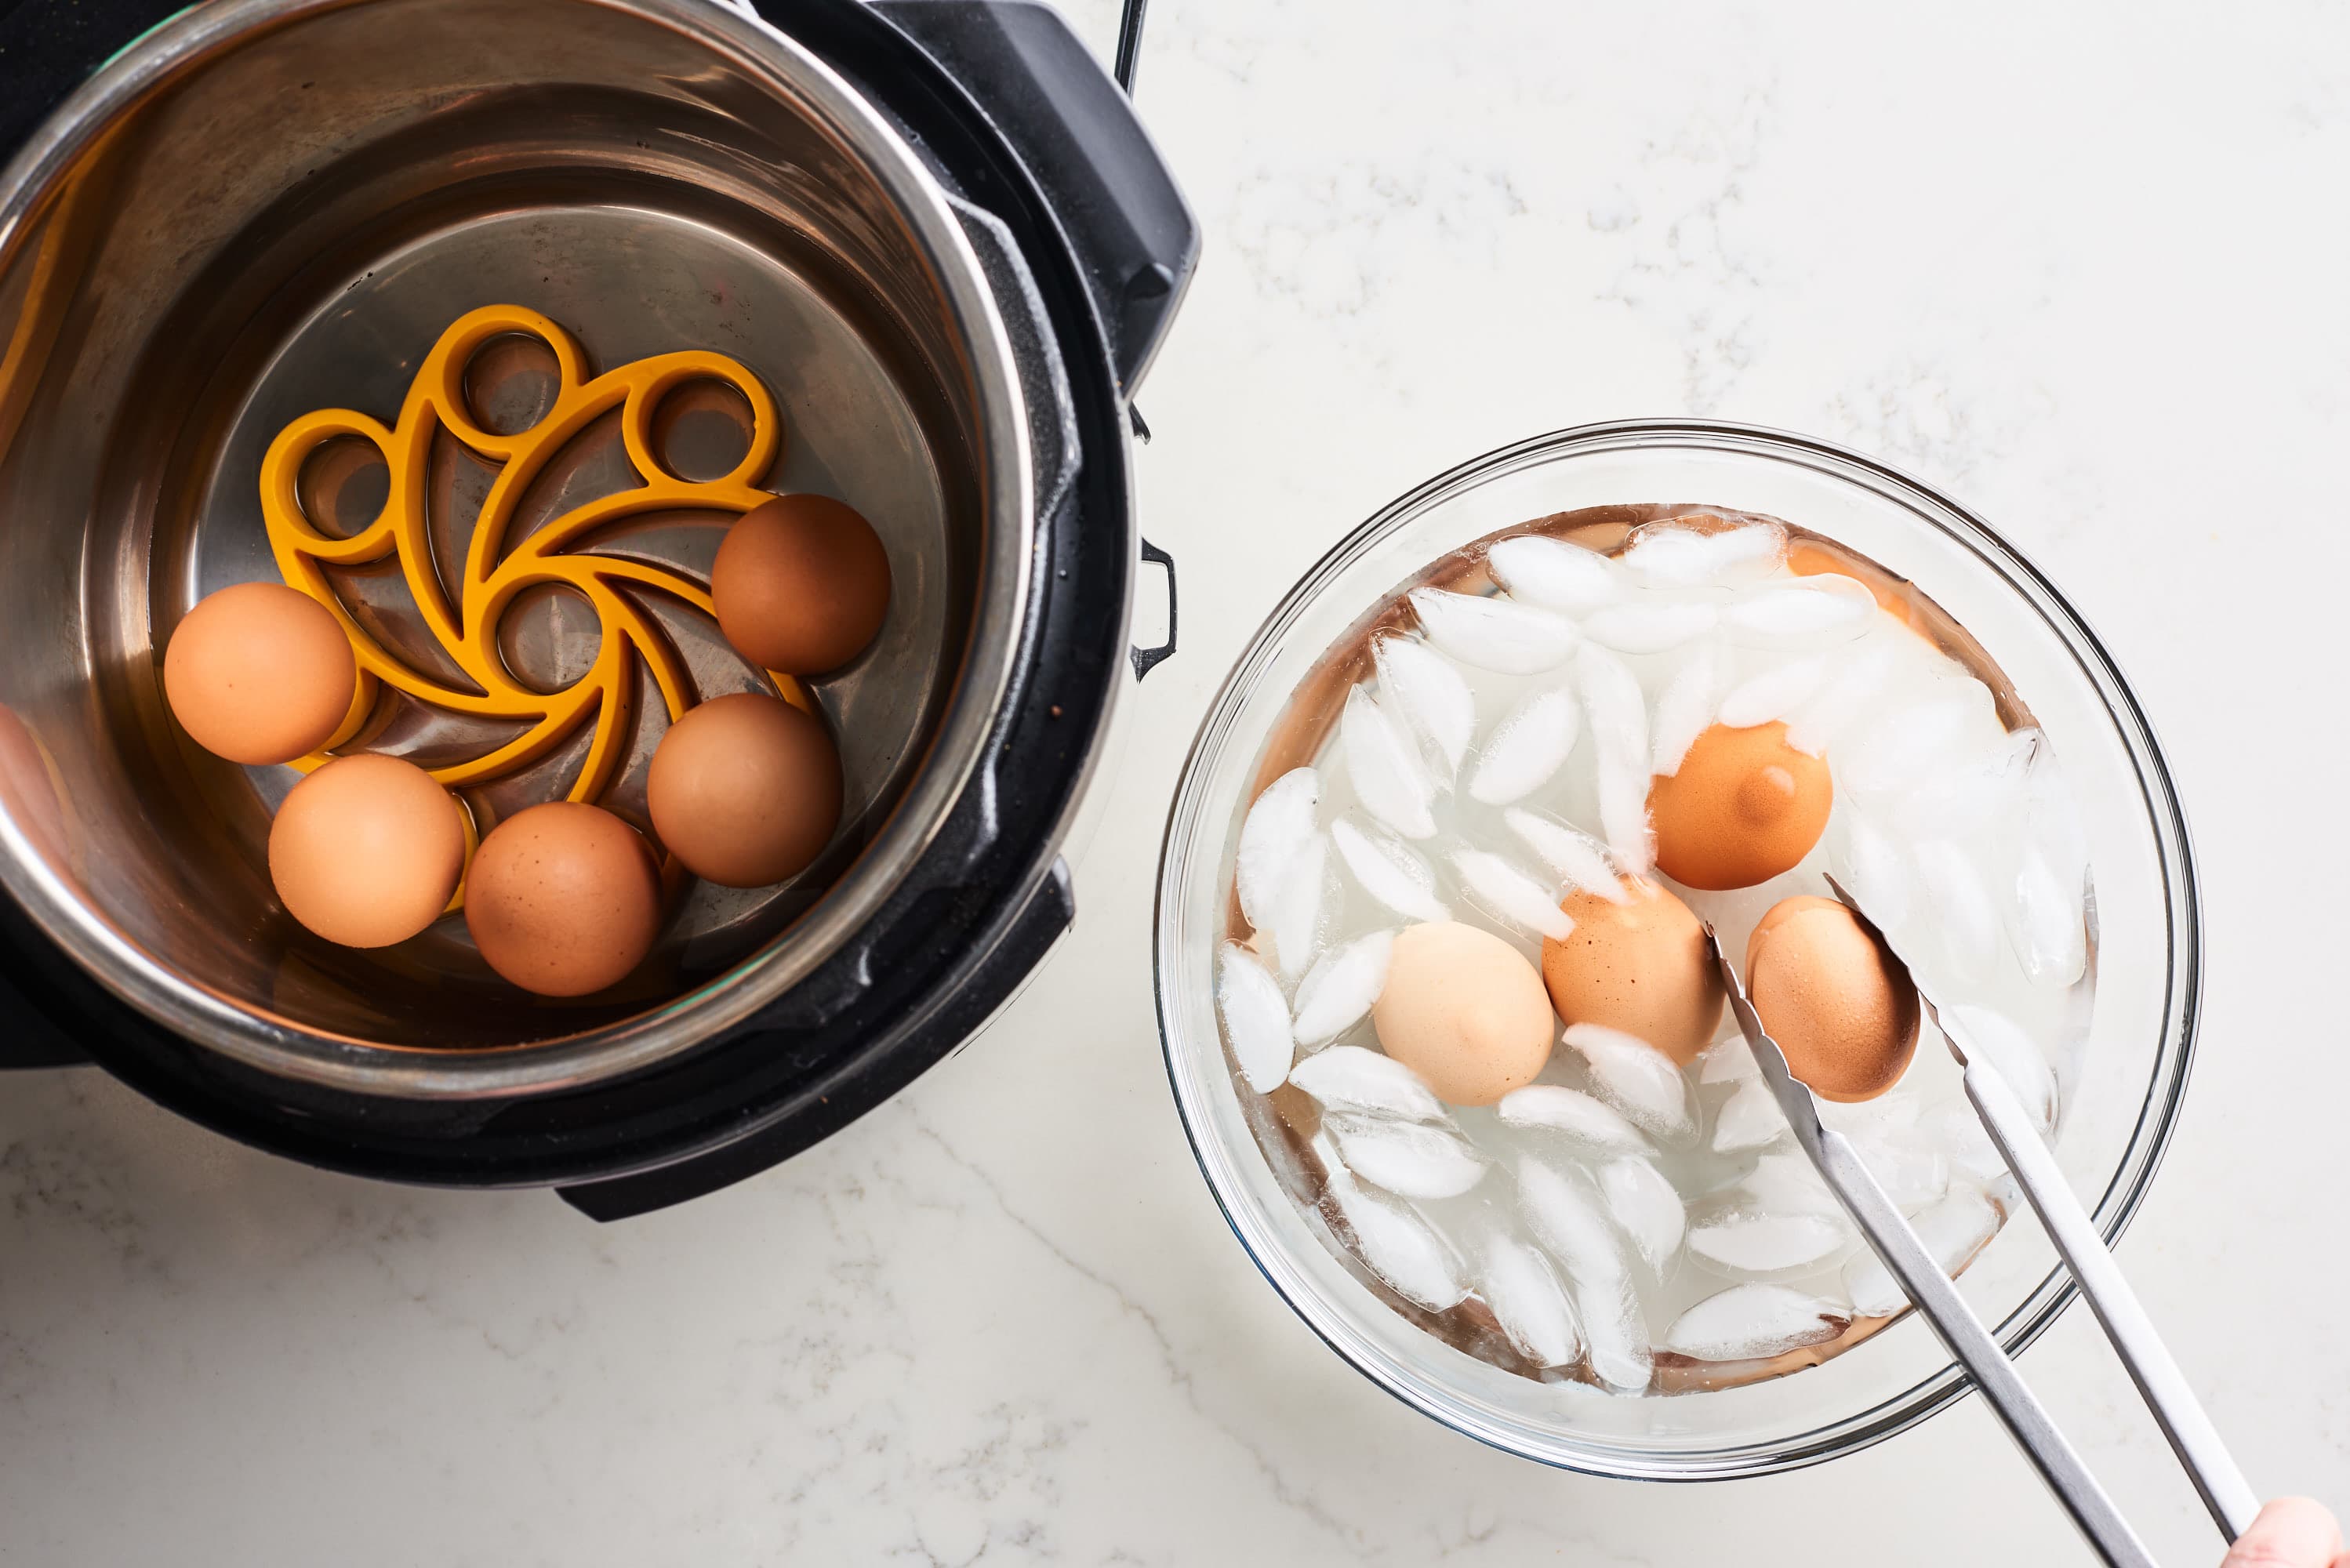 https://cdn.apartmenttherapy.info/image/upload/v1579293955/k/Photo/Recipes/2020-01-Hot-To-Instant-Pot-Hard-Boiled-Eggs/How-to-Make-the-Best-Instant-Pot-Hard-Boiled-Eggs_035.jpg